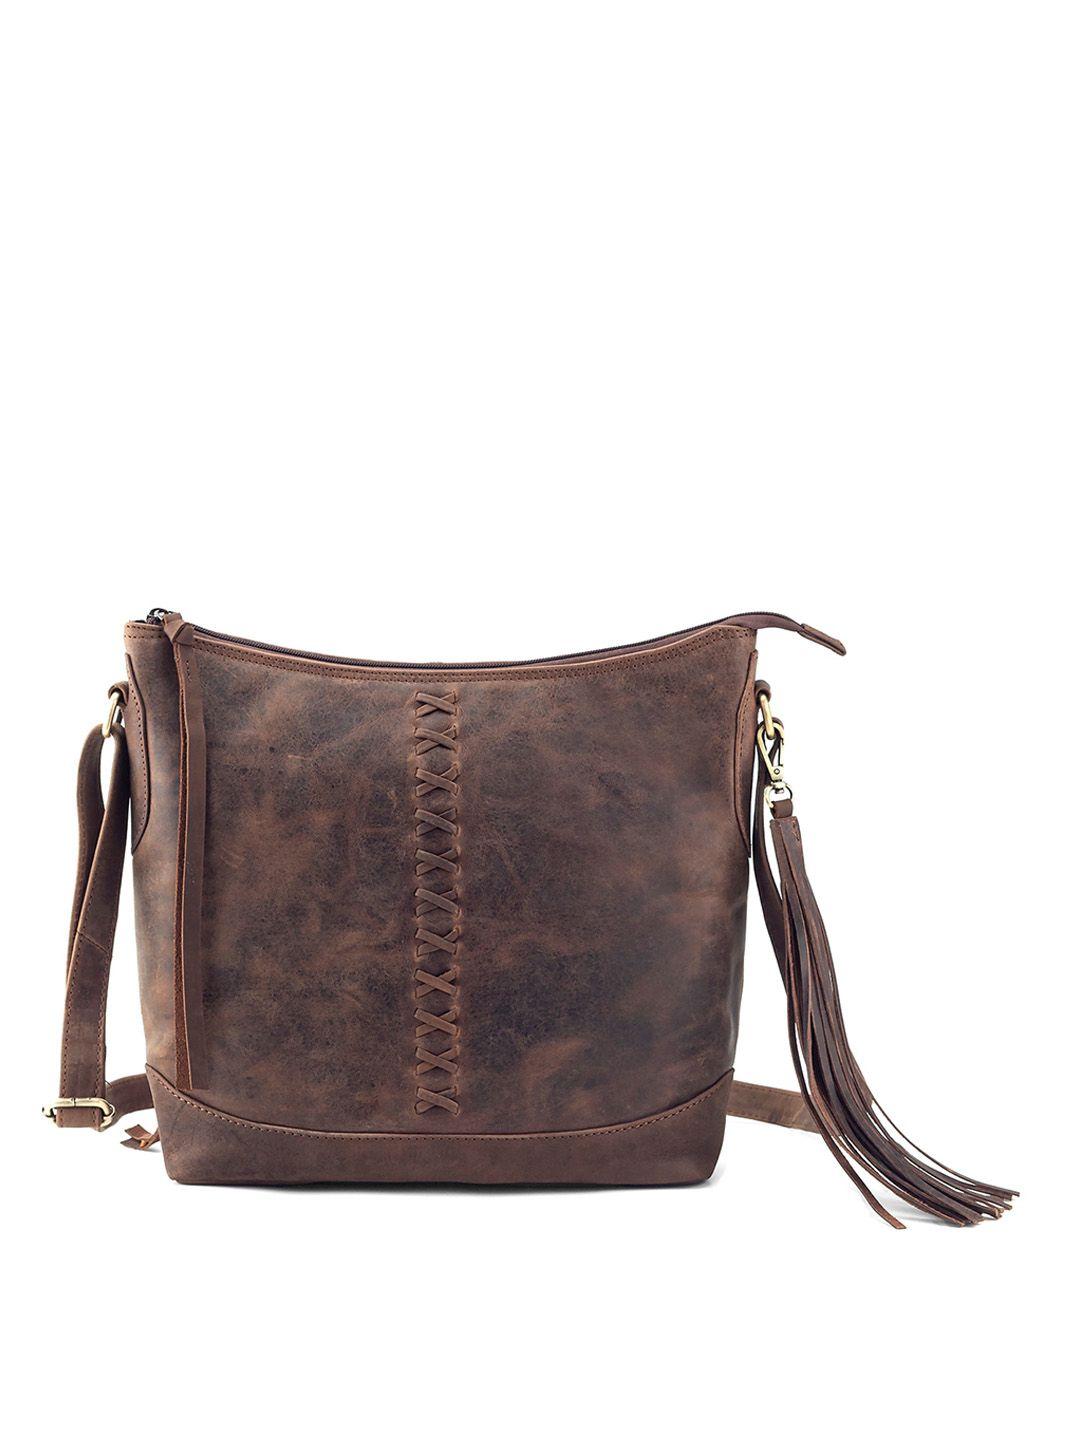 goatter women textured leather structured sling bag